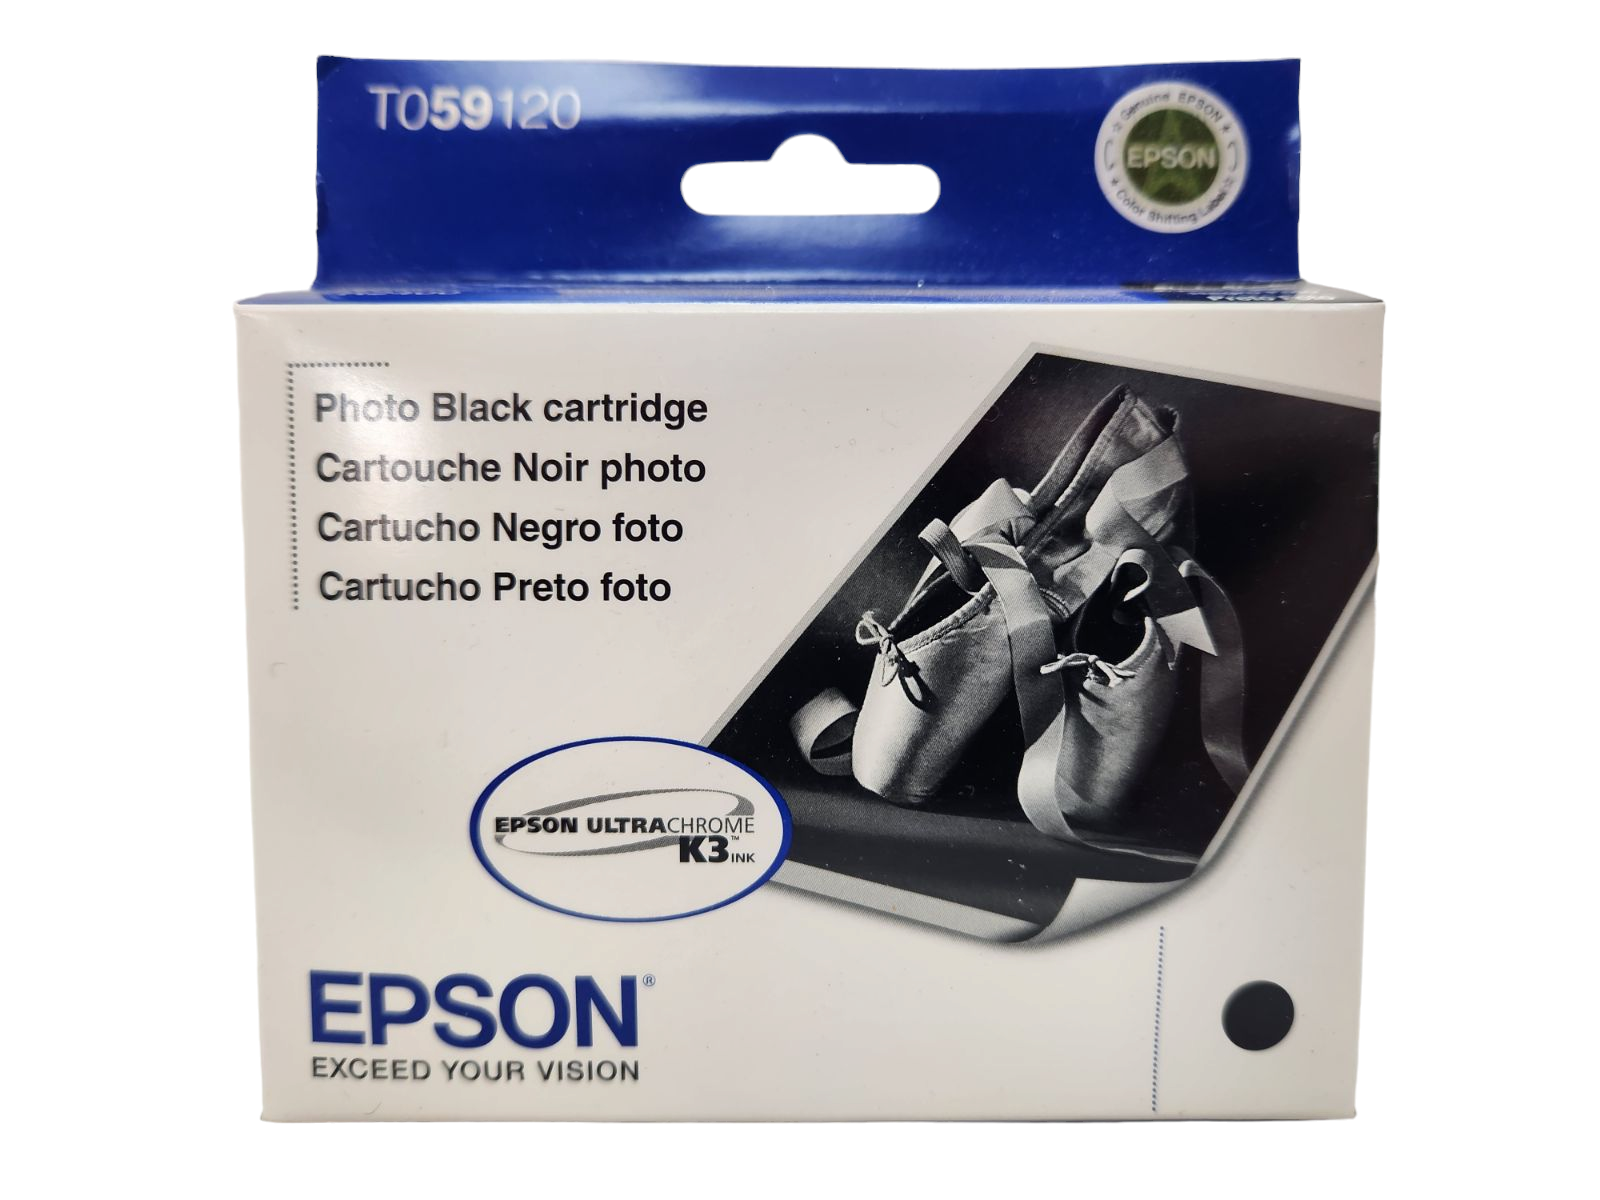 Epson Photo Black Ink Cartridge T059120 For Stylus Photo R2400 - $19.47